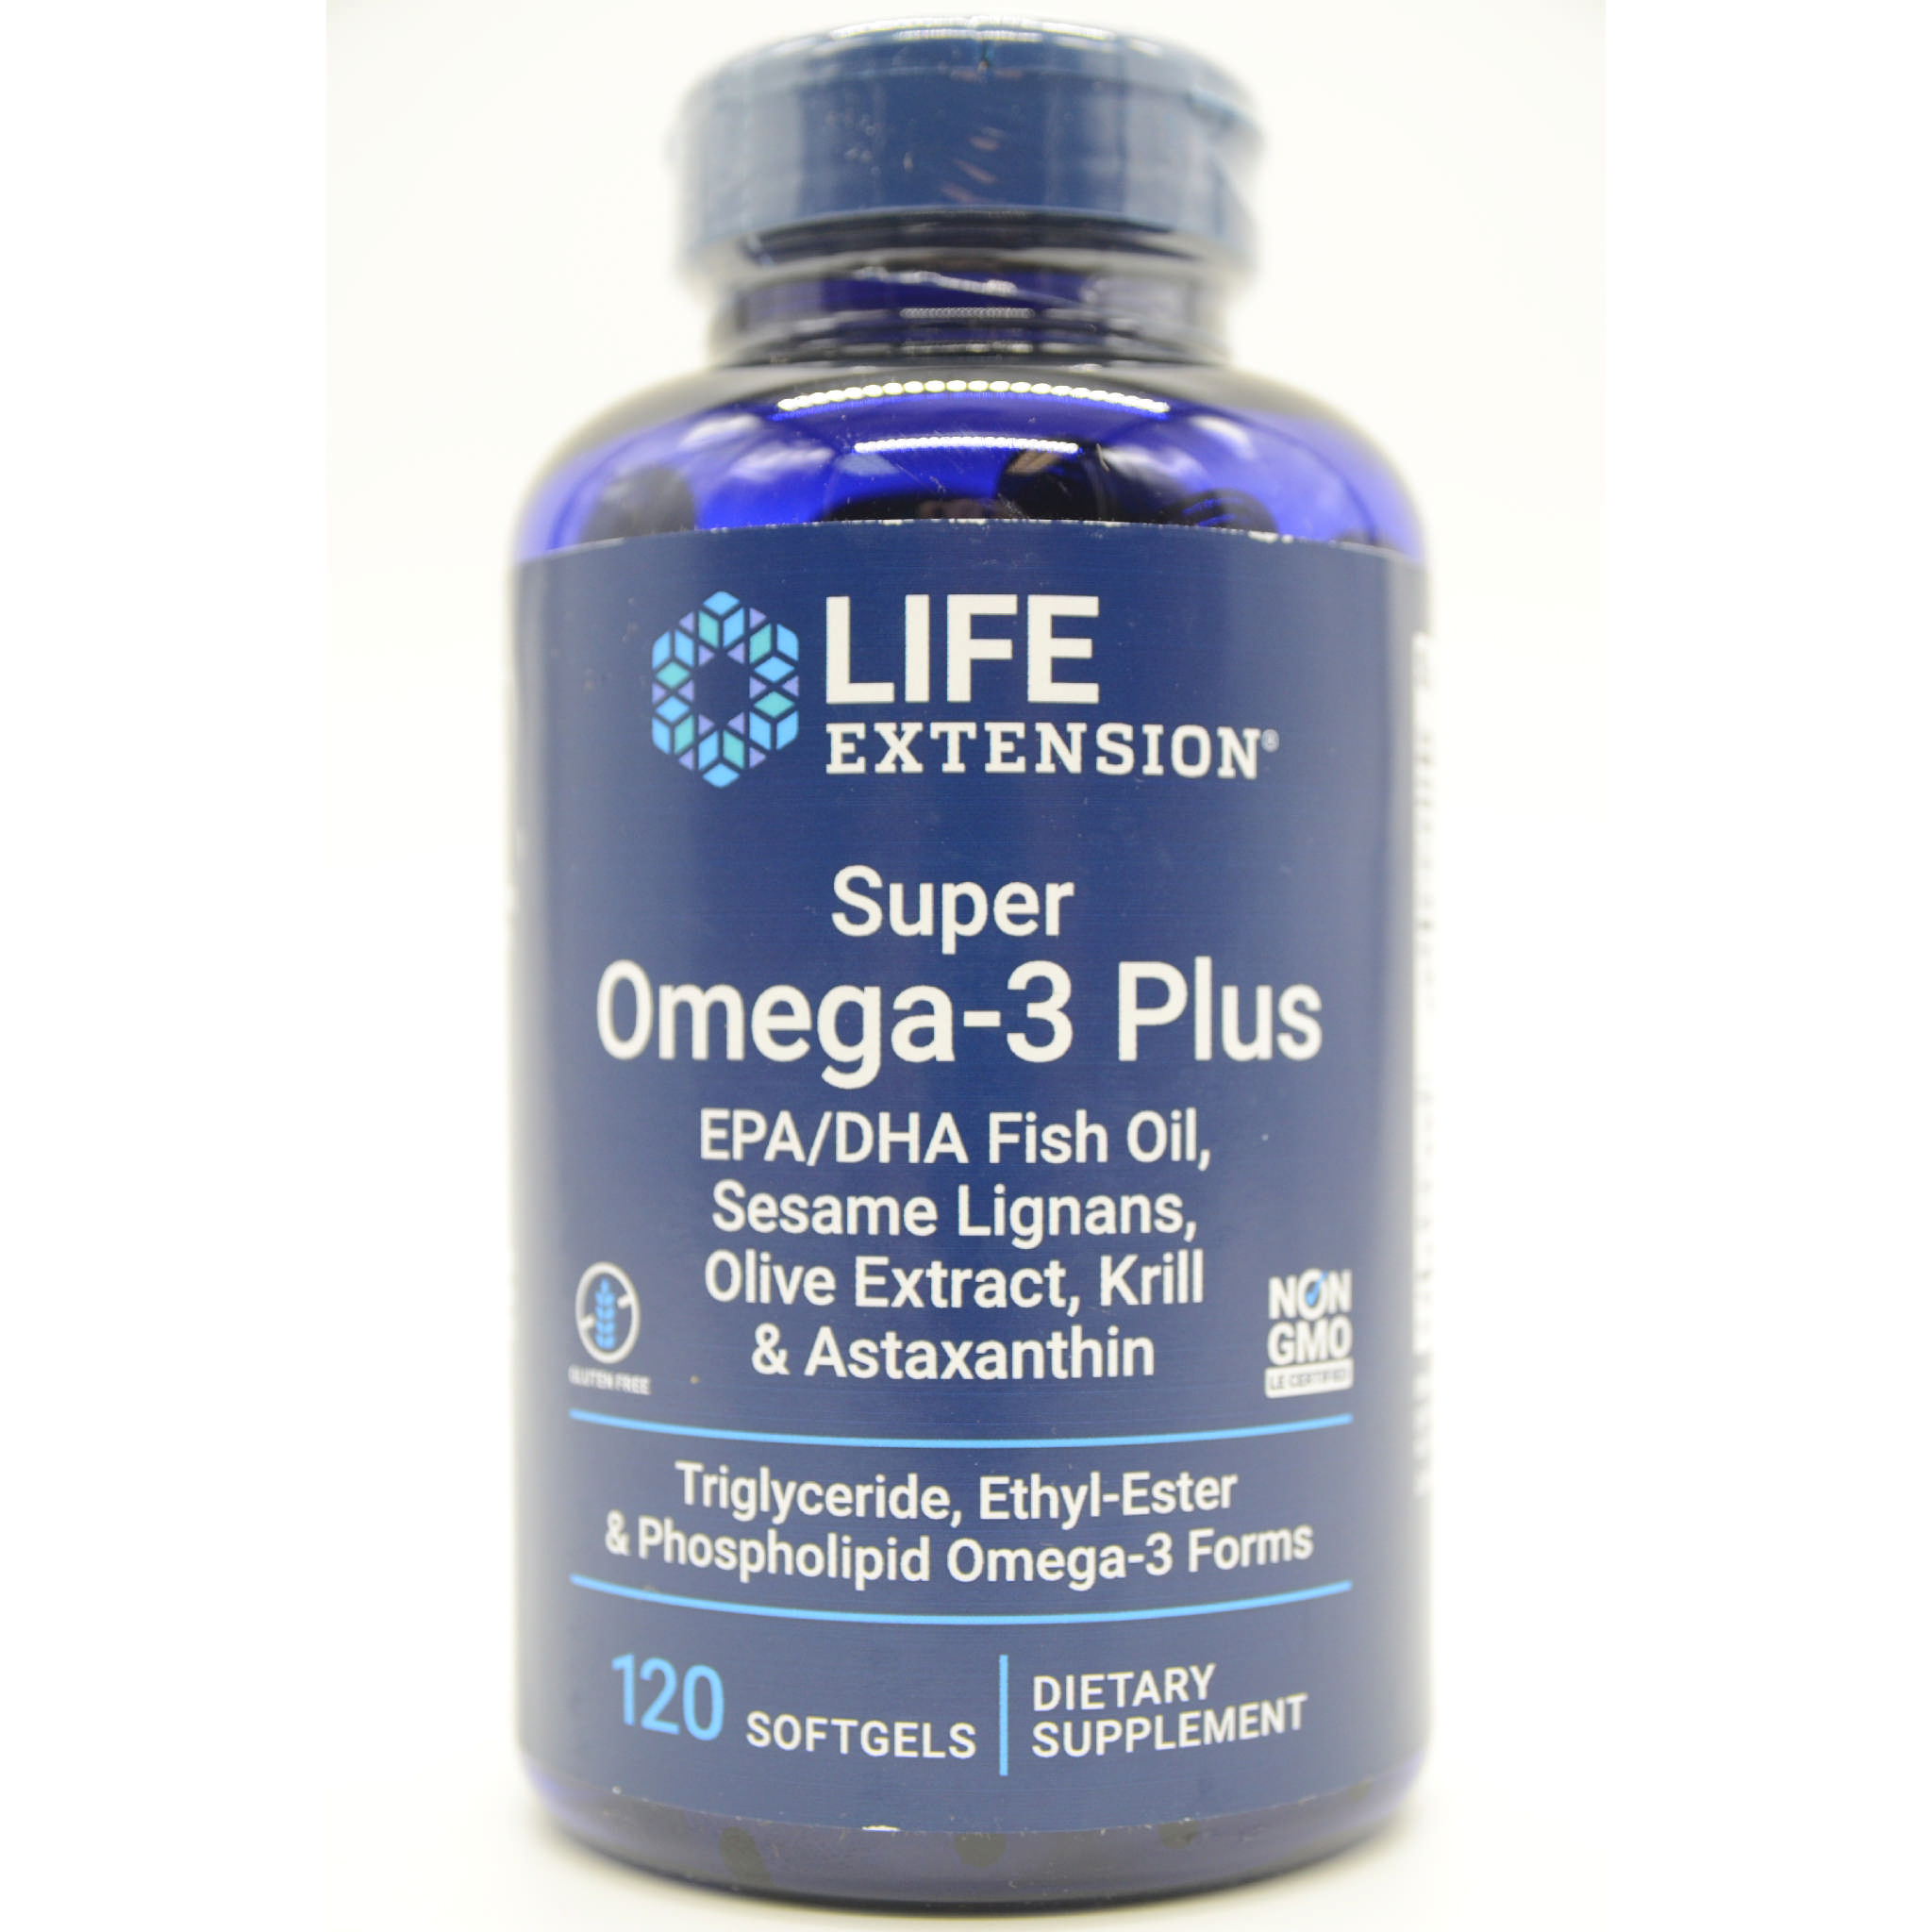 Life Extension - Omega W/ Krill & Astaxanthin